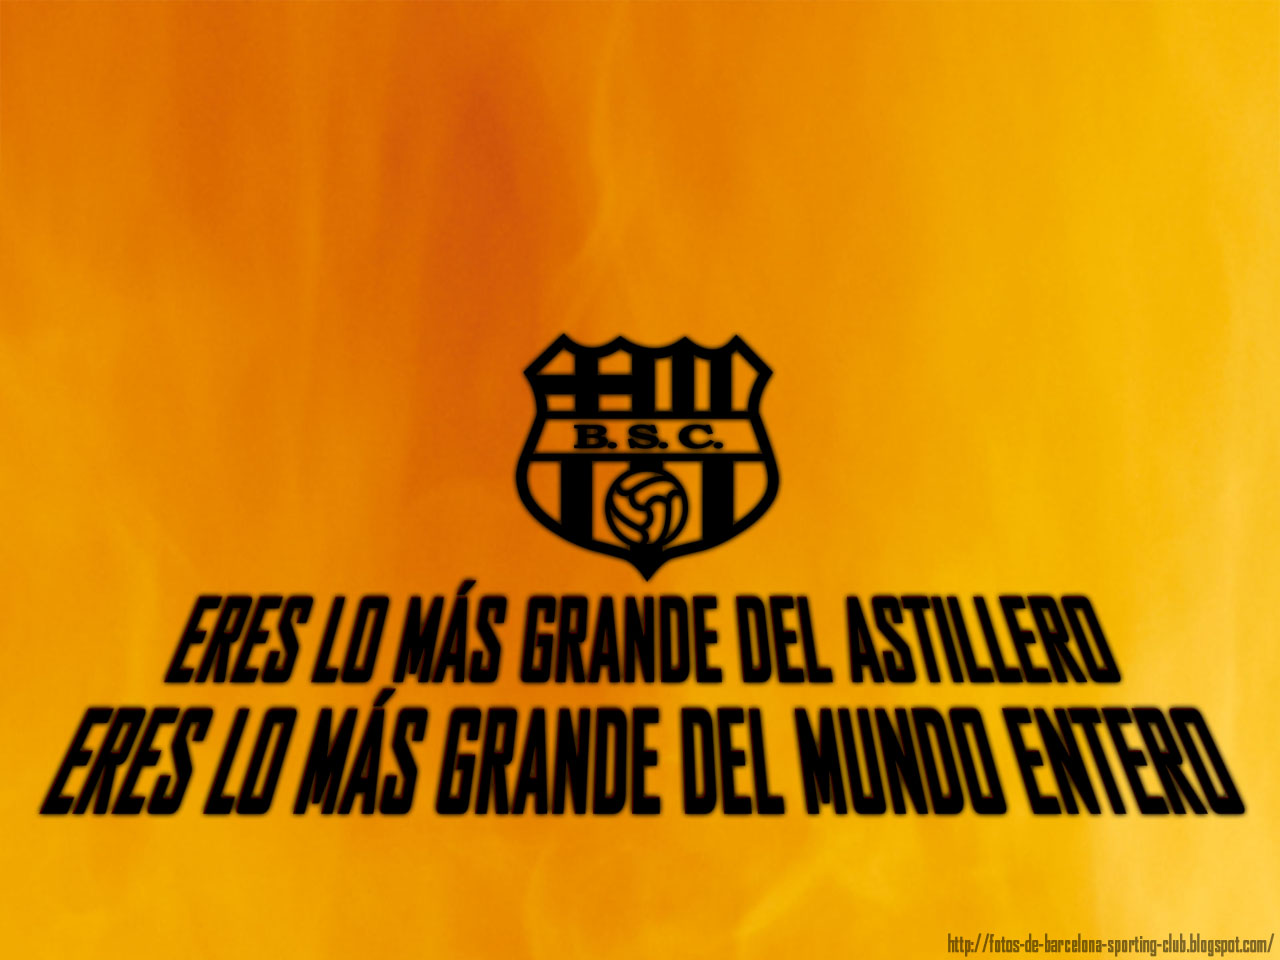 http://4.bp.blogspot.com/-1V8jYO4pTO4/UCHcV9YxgbI/AAAAAAAACFg/BwXqRSVlG_Y/s1600/Fotos+Wallpaper+Barcelona+Sporting+Club+Guayaquil+Ecuador+A2.jpg